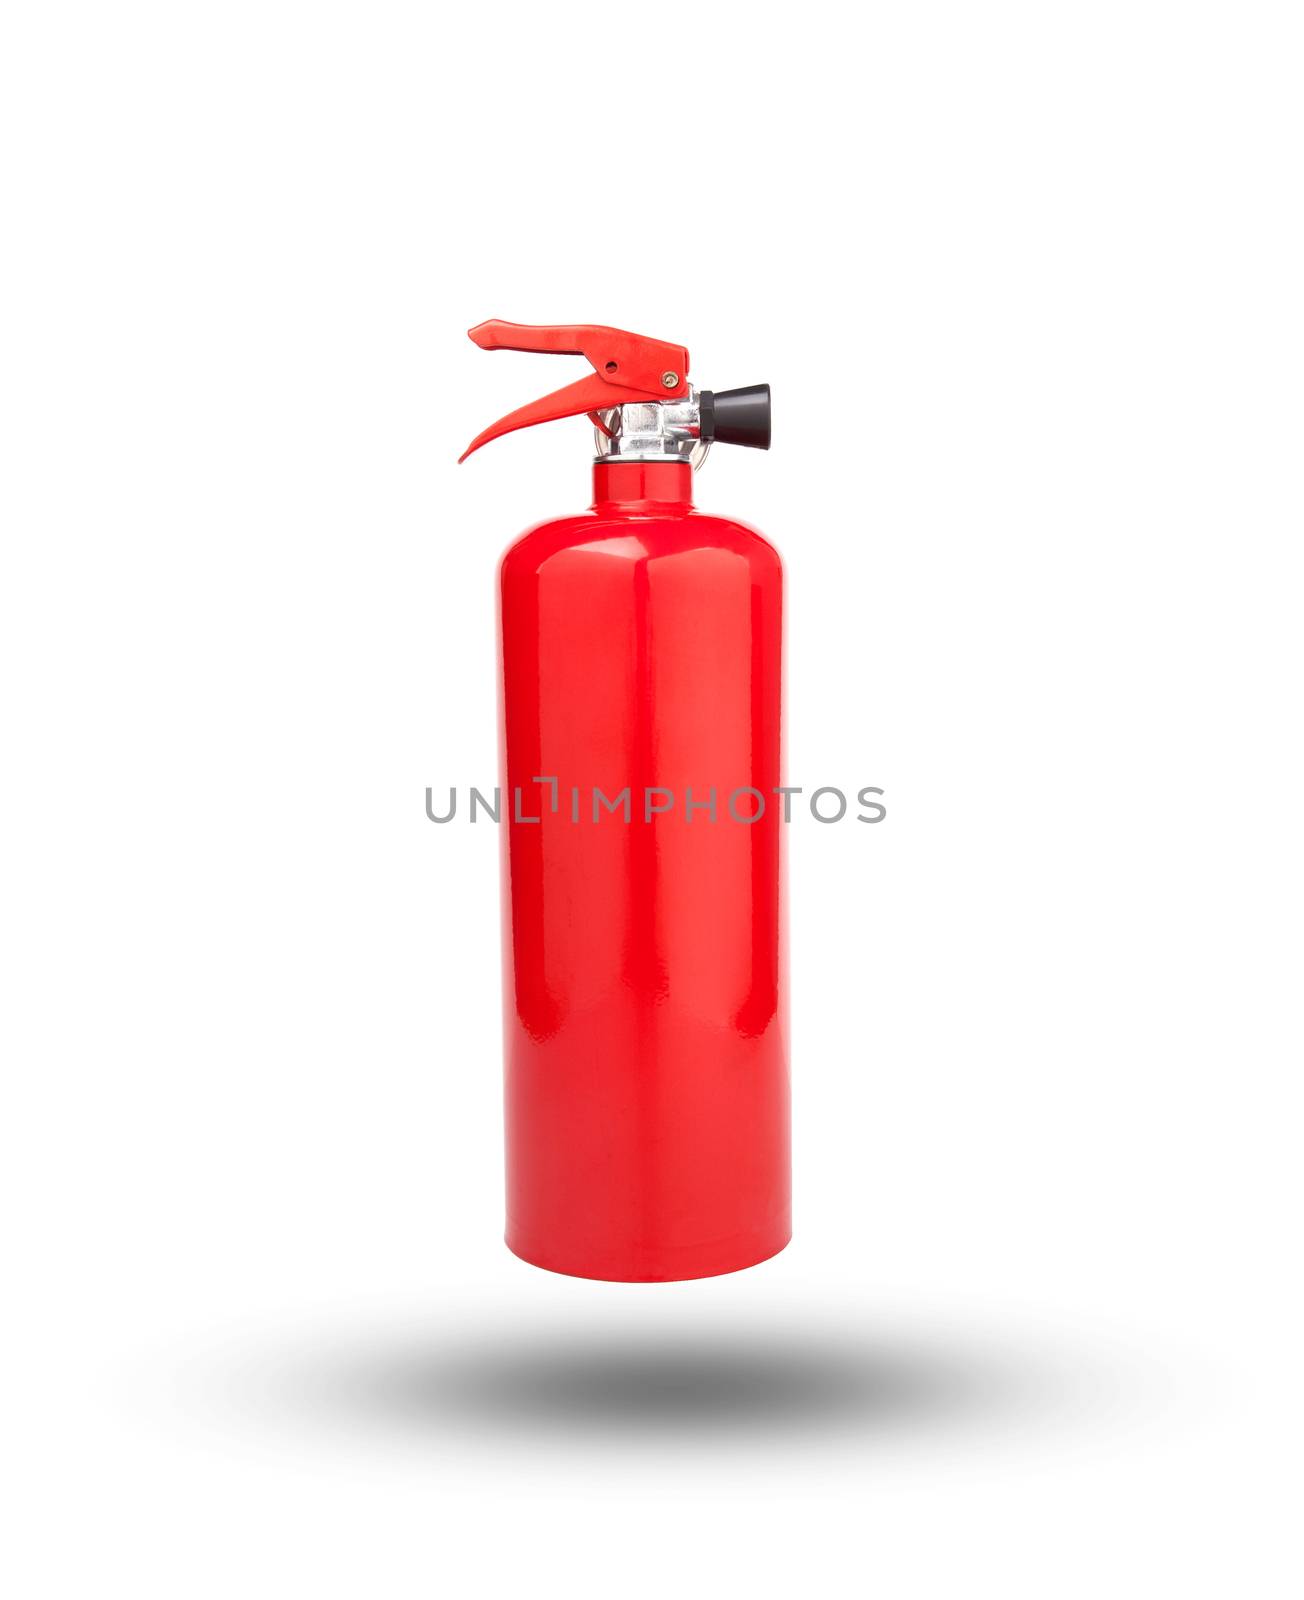 fire extinguisher tank isolated white background by khunaspix